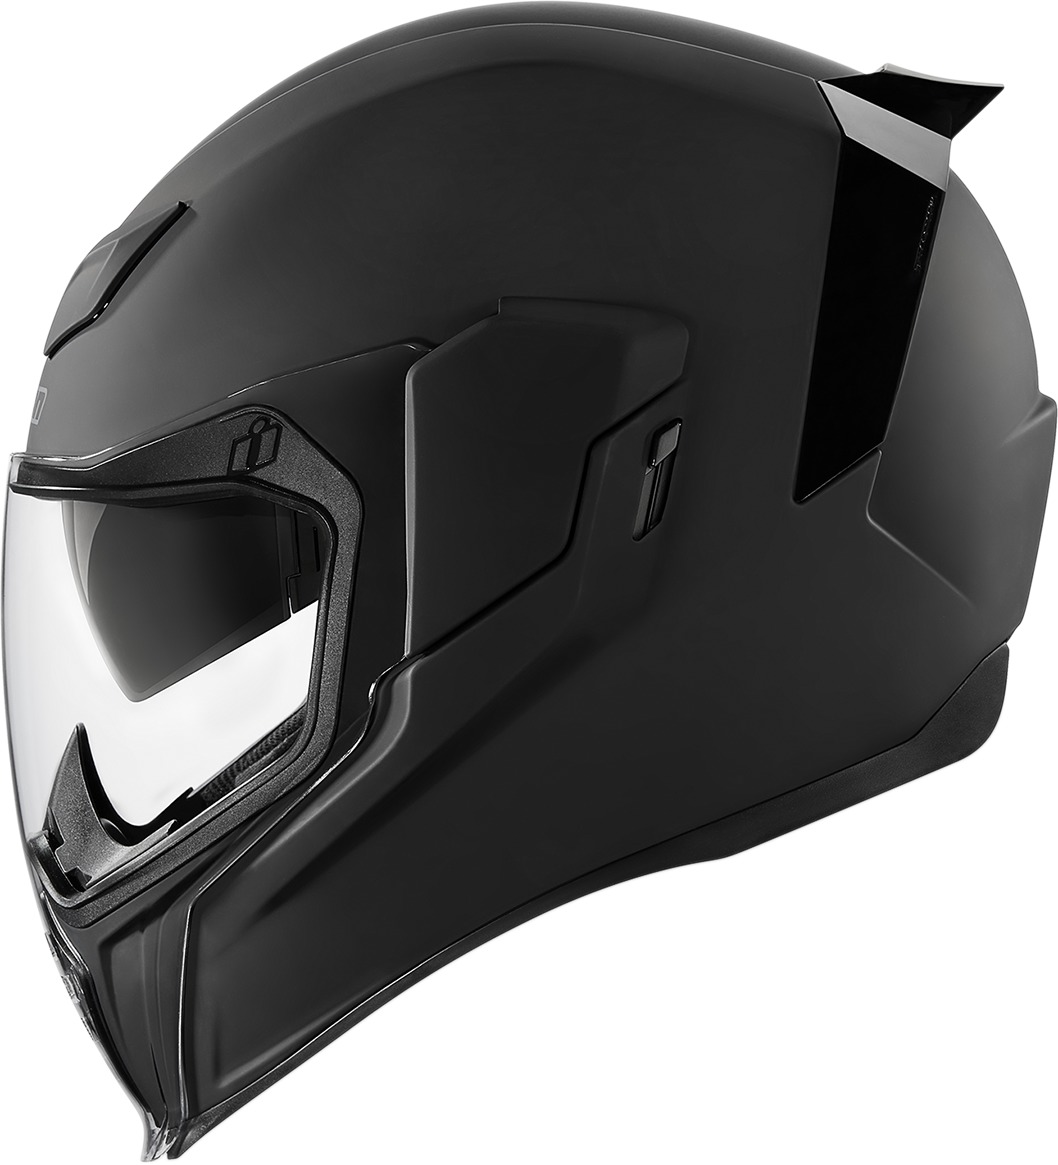 Airflite Full Face Helmet - Rubatone Black Small - Click Image to Close